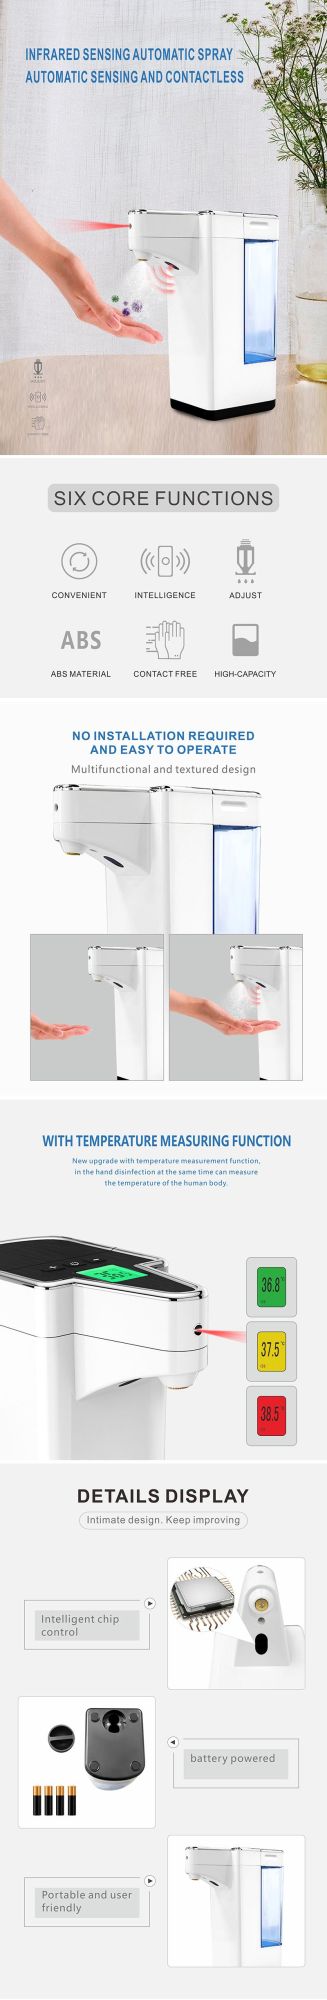 Public Places Use Hand Sanitizer Soap Dispenser Thermometer Smart Soap Dispenser 2 in 1